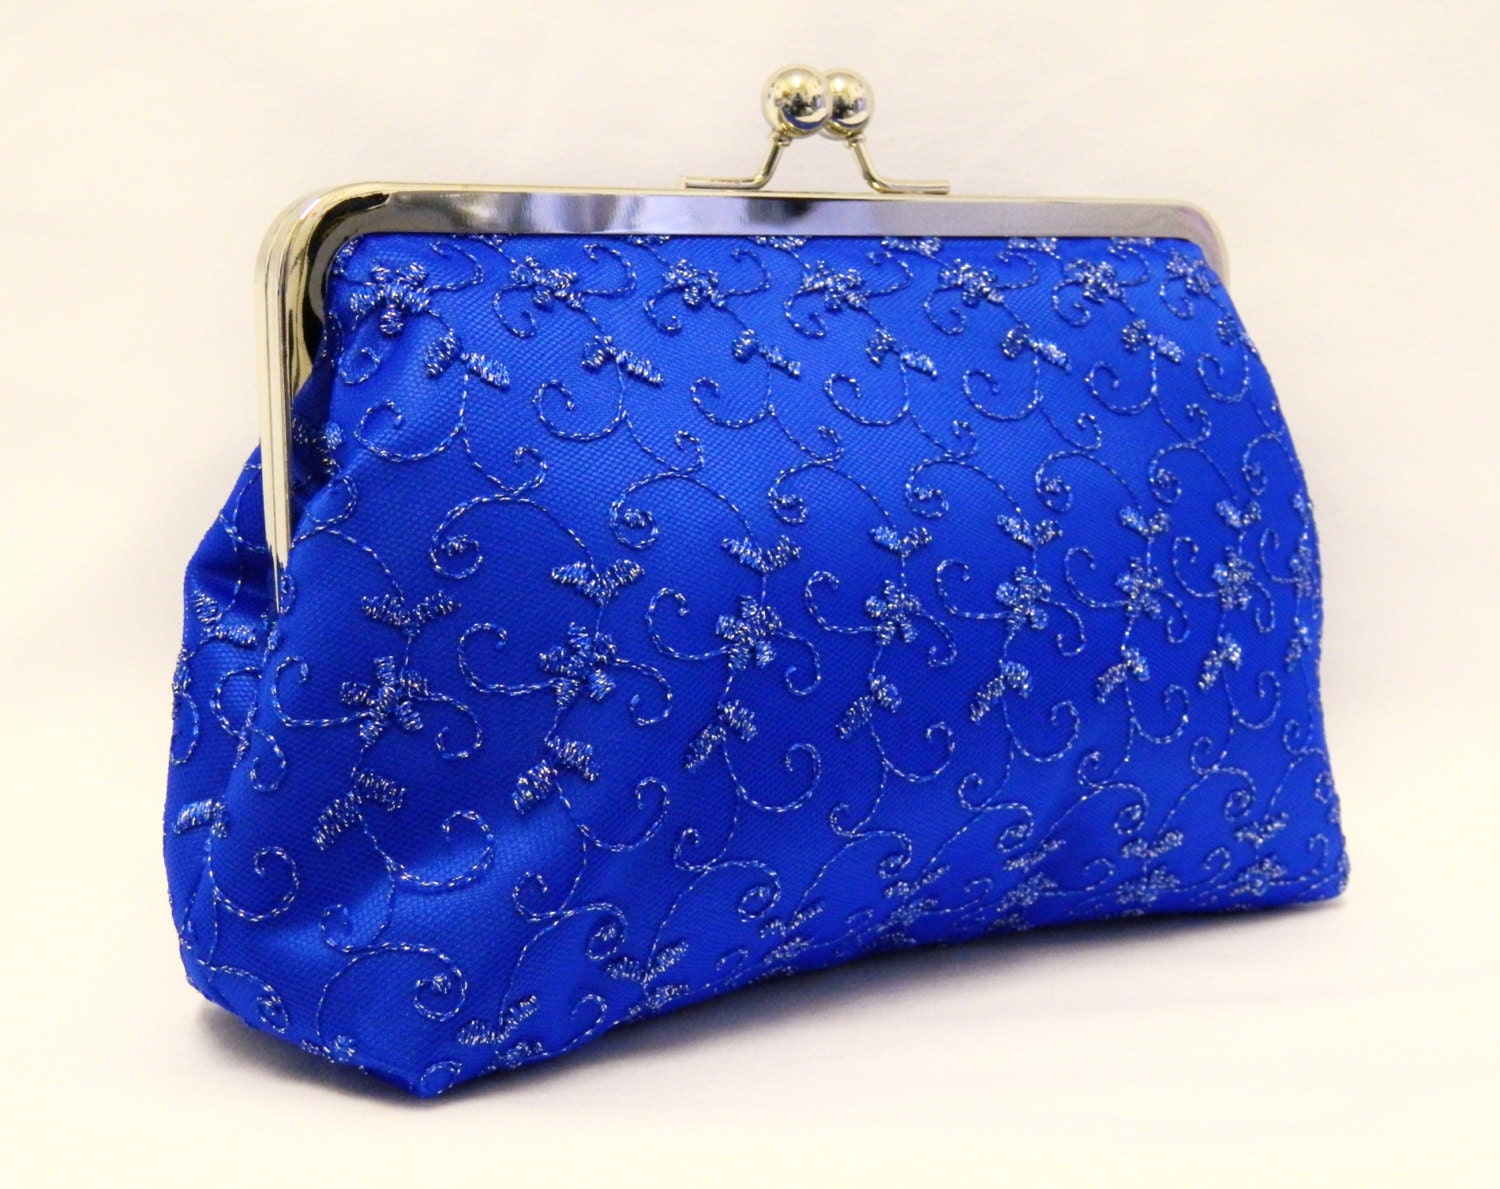 Reed Krakoff Royal Leather Blue Clutch Back Pocket with Chain Leather  Handbag | eBay